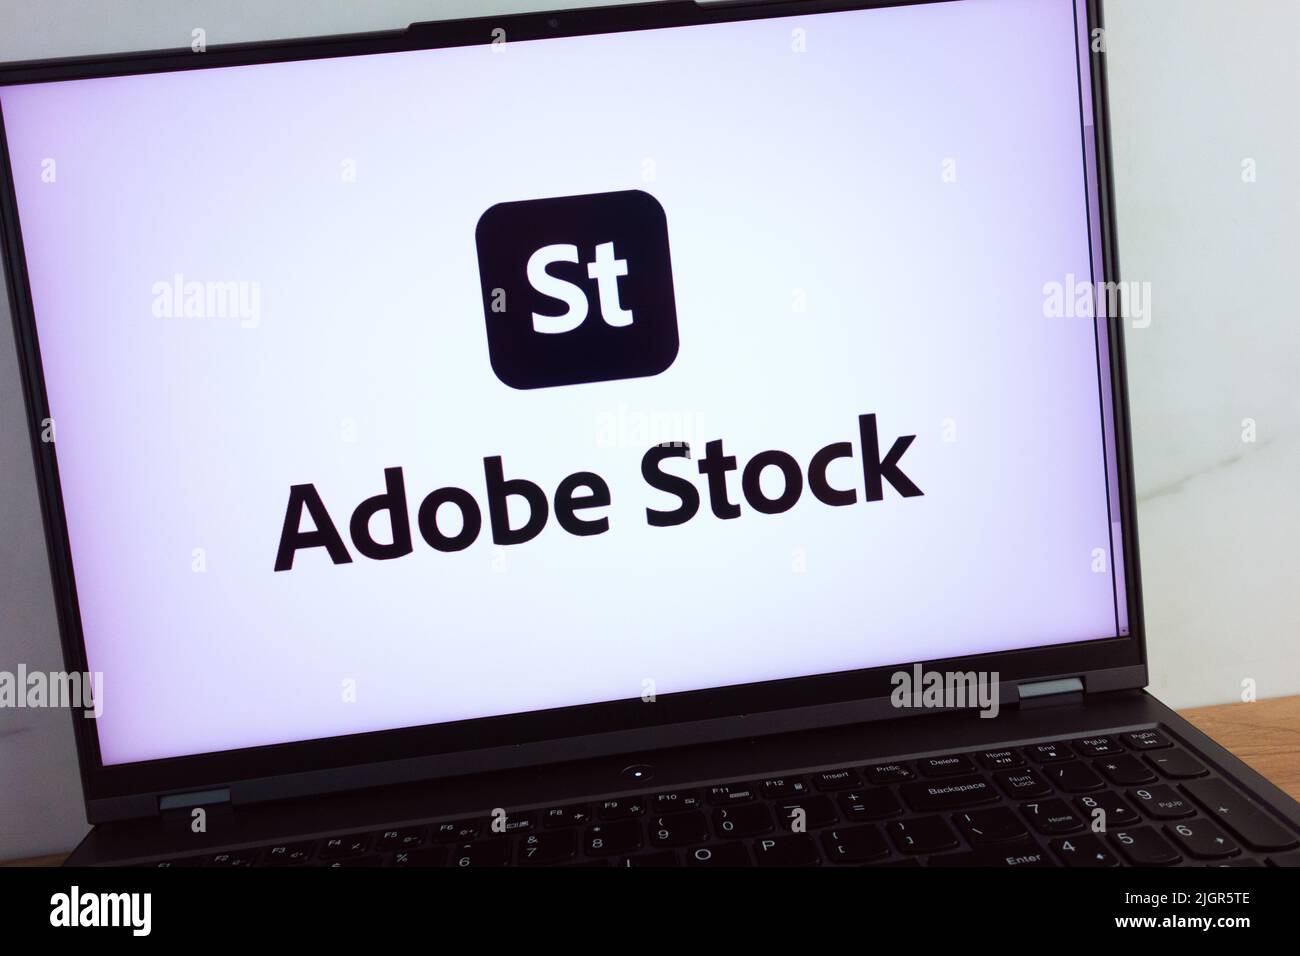 KONSKIE, POLAND - July 11, 2022: Adobe Stock stock photography service logo displayed on laptop computer screen Stock Photo